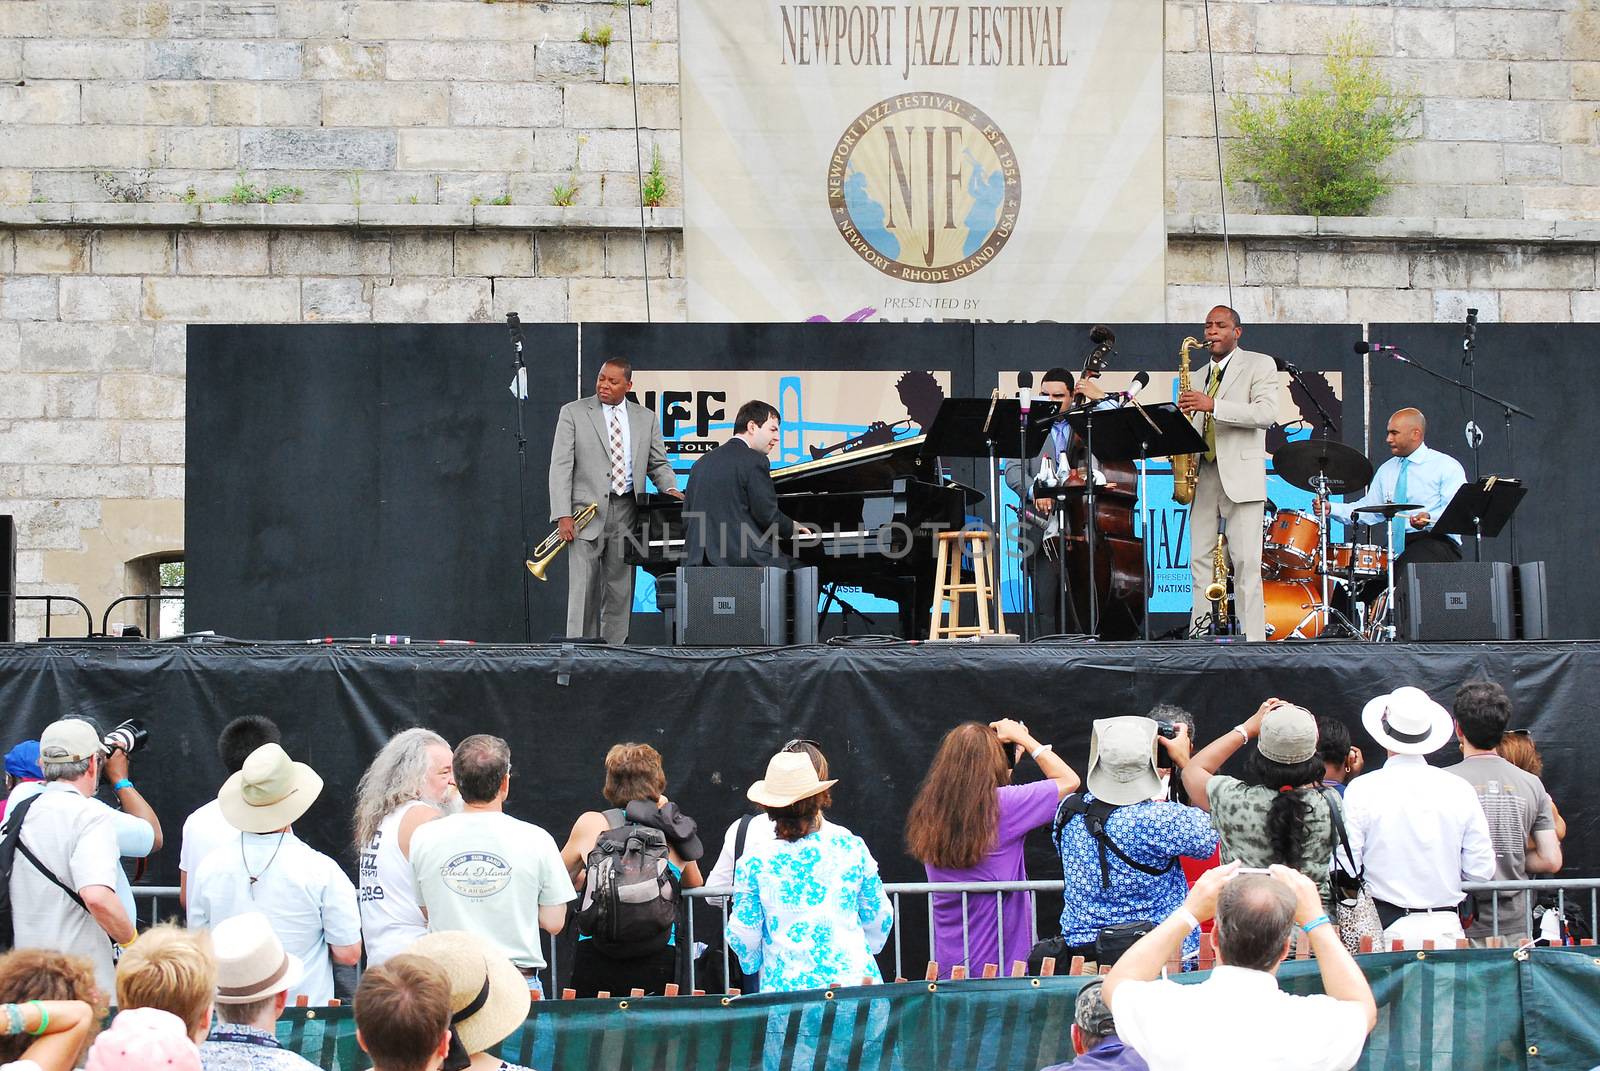 Wynton Marsalis Jazz Quintet performing at the Newport Jazz Festival.